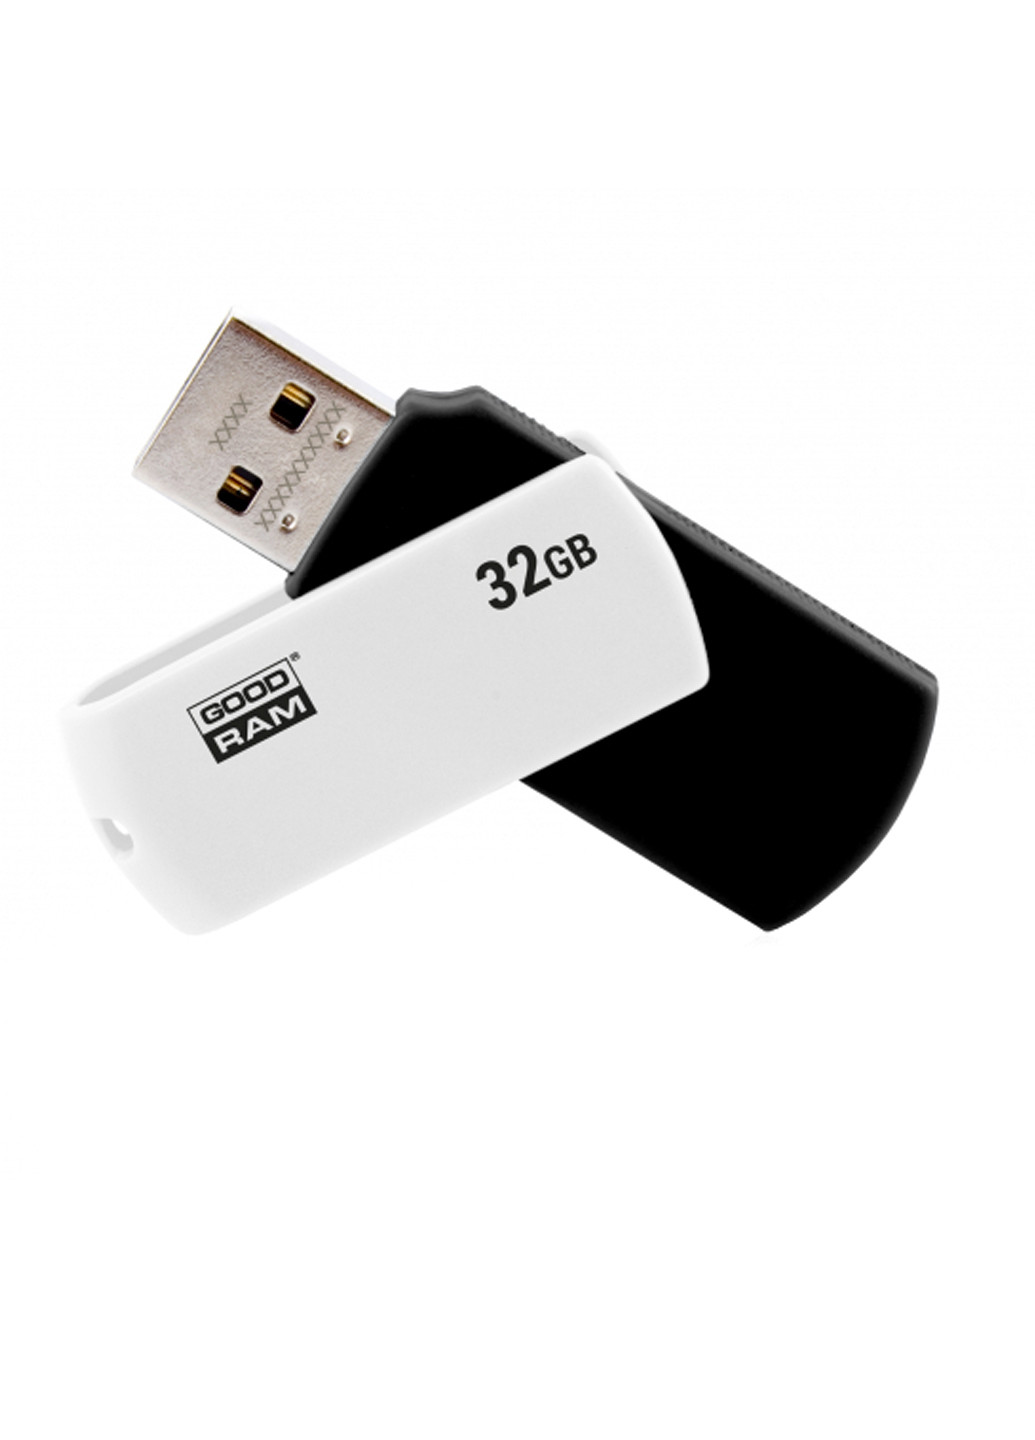 Флеш память USB 32GB UCO2 USB 2.0 Colour Black&White (UCO2-0320KWR11) Goodram флеш память usb goodram 32gb uco2 usb 2.0 colour black&white (uco2-0320kwr11) (136742749)